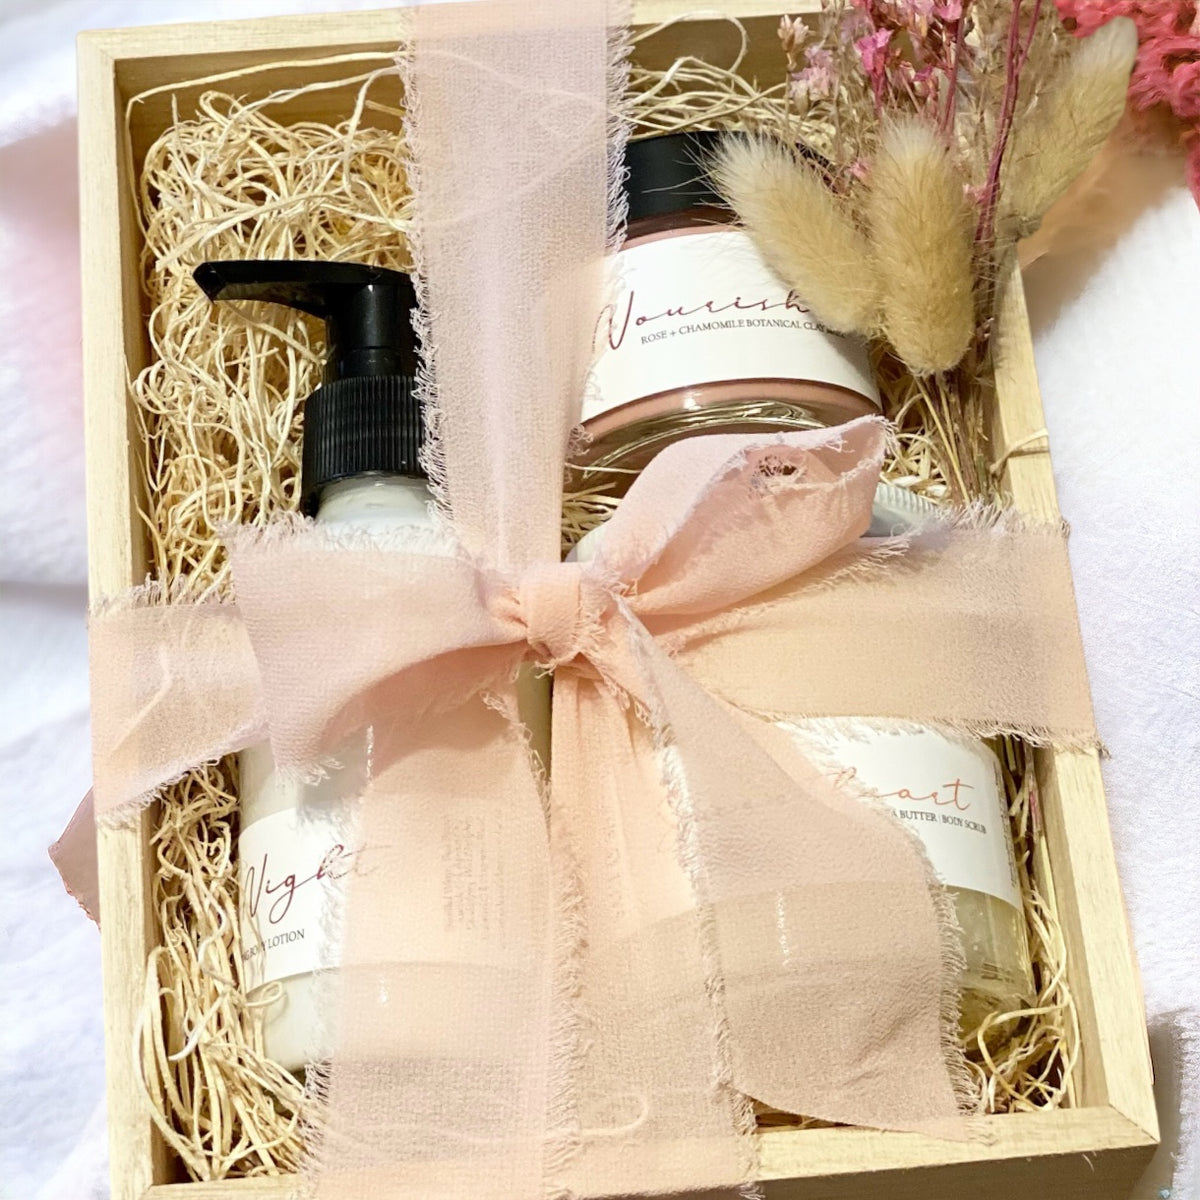 Self-Love Gift Box